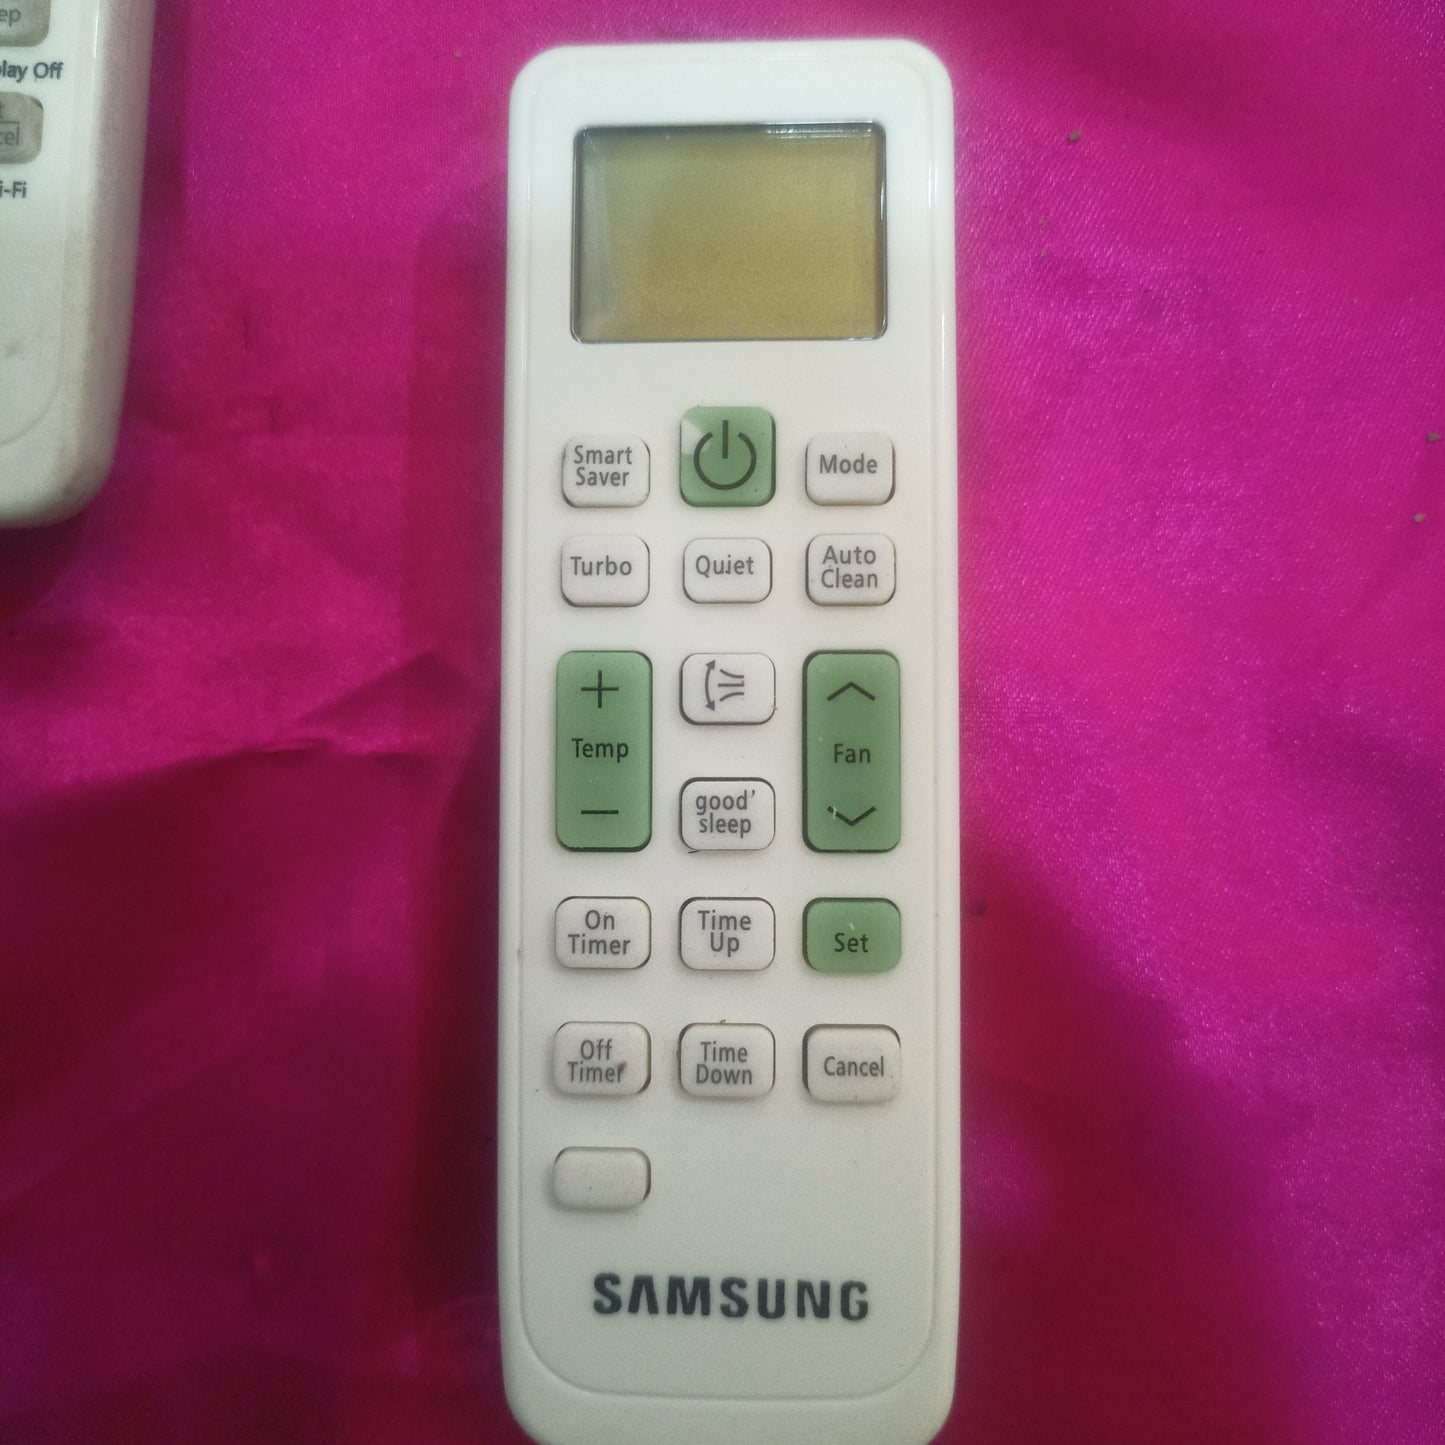 Samsung Aircondition Remote Control For Samsung smart saver, turbo (White) (AC24)*